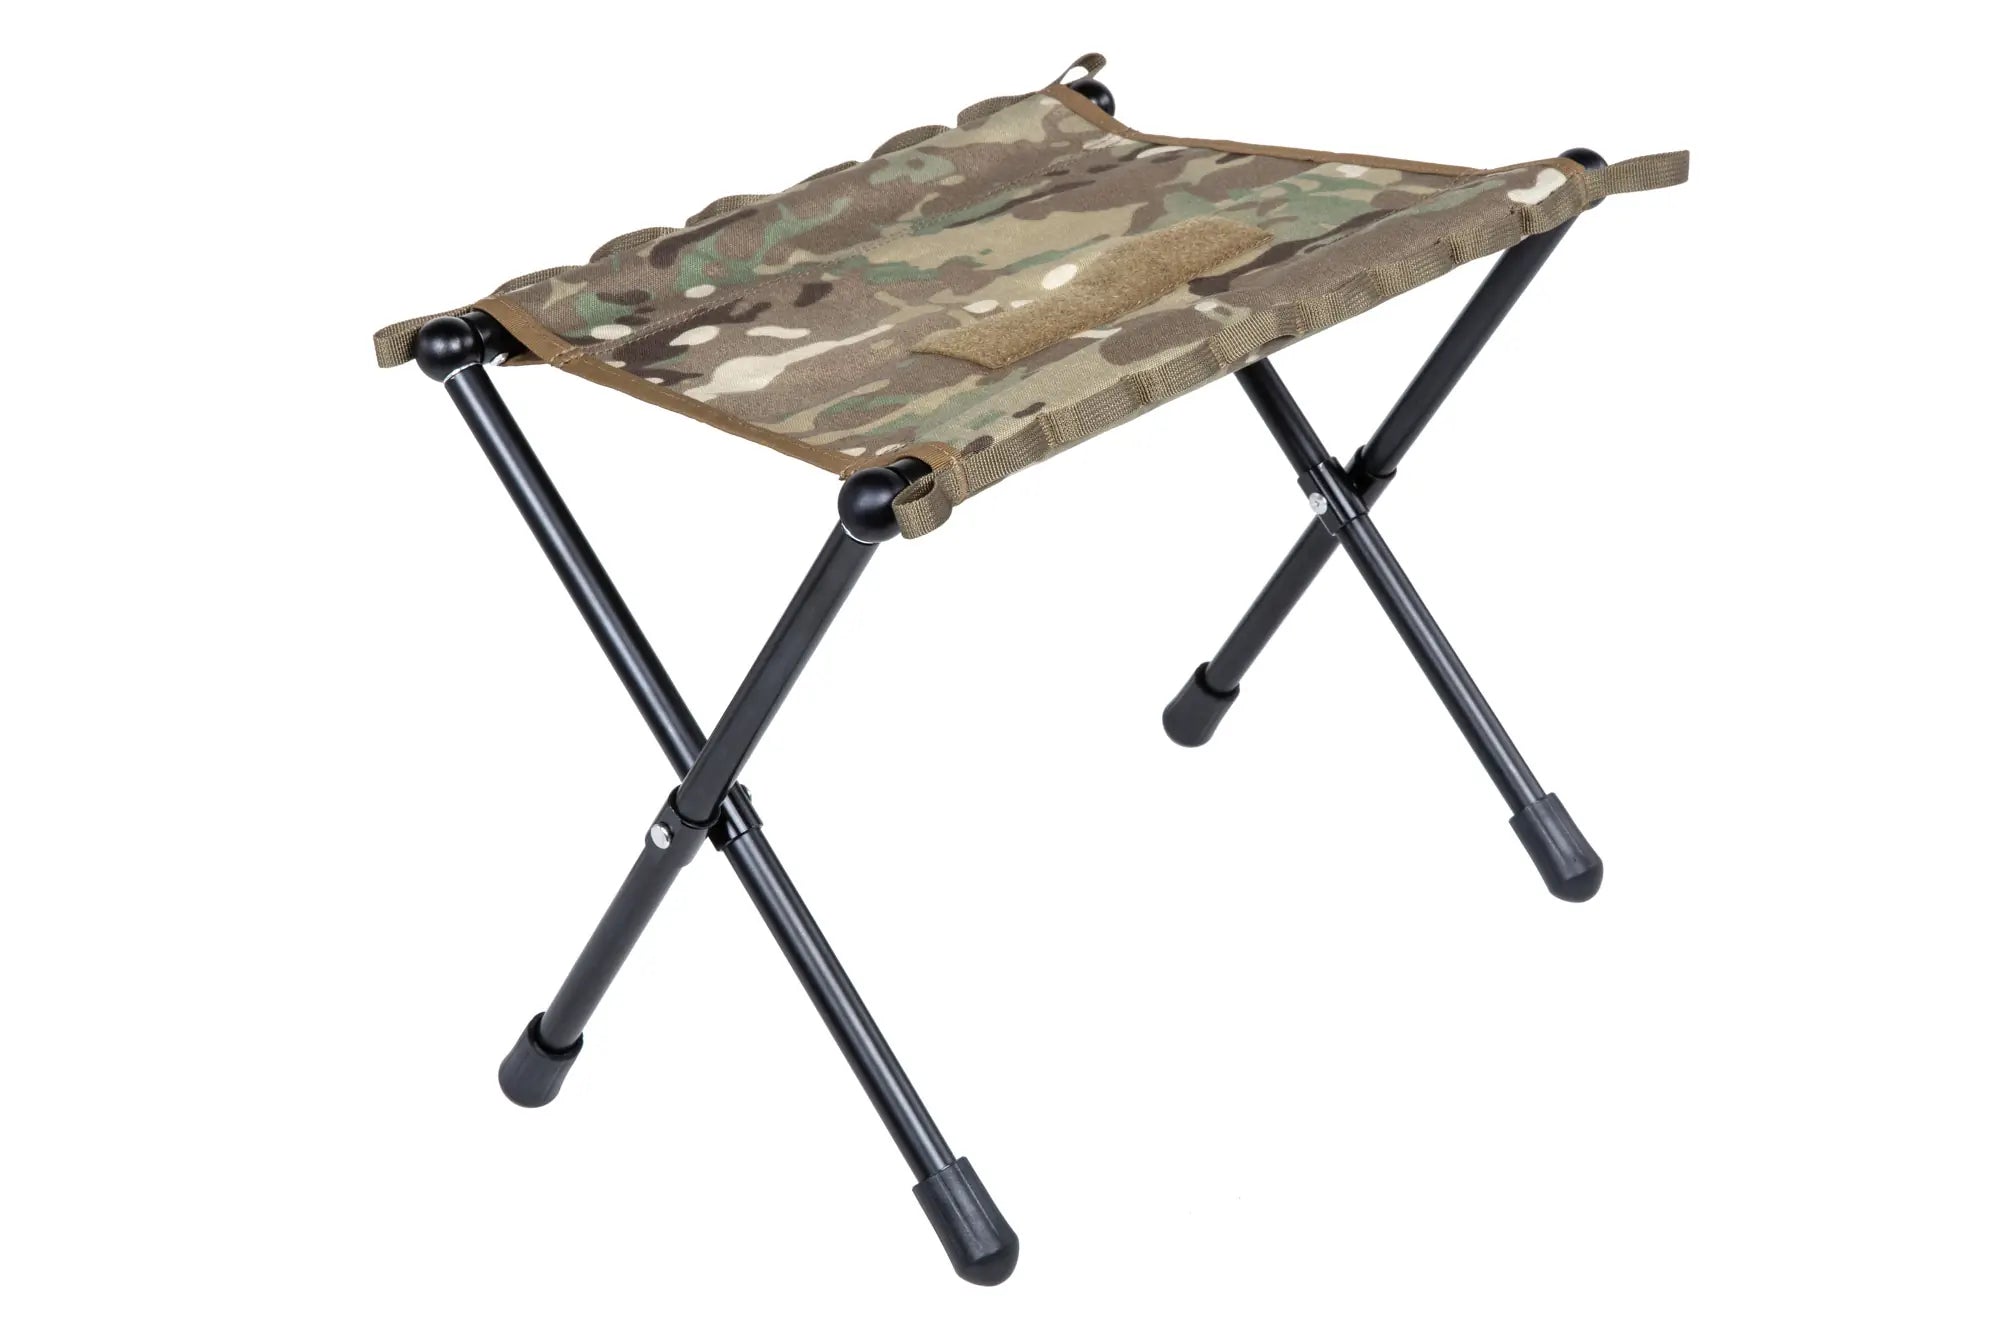 Wosport Multicam folding hiking stool